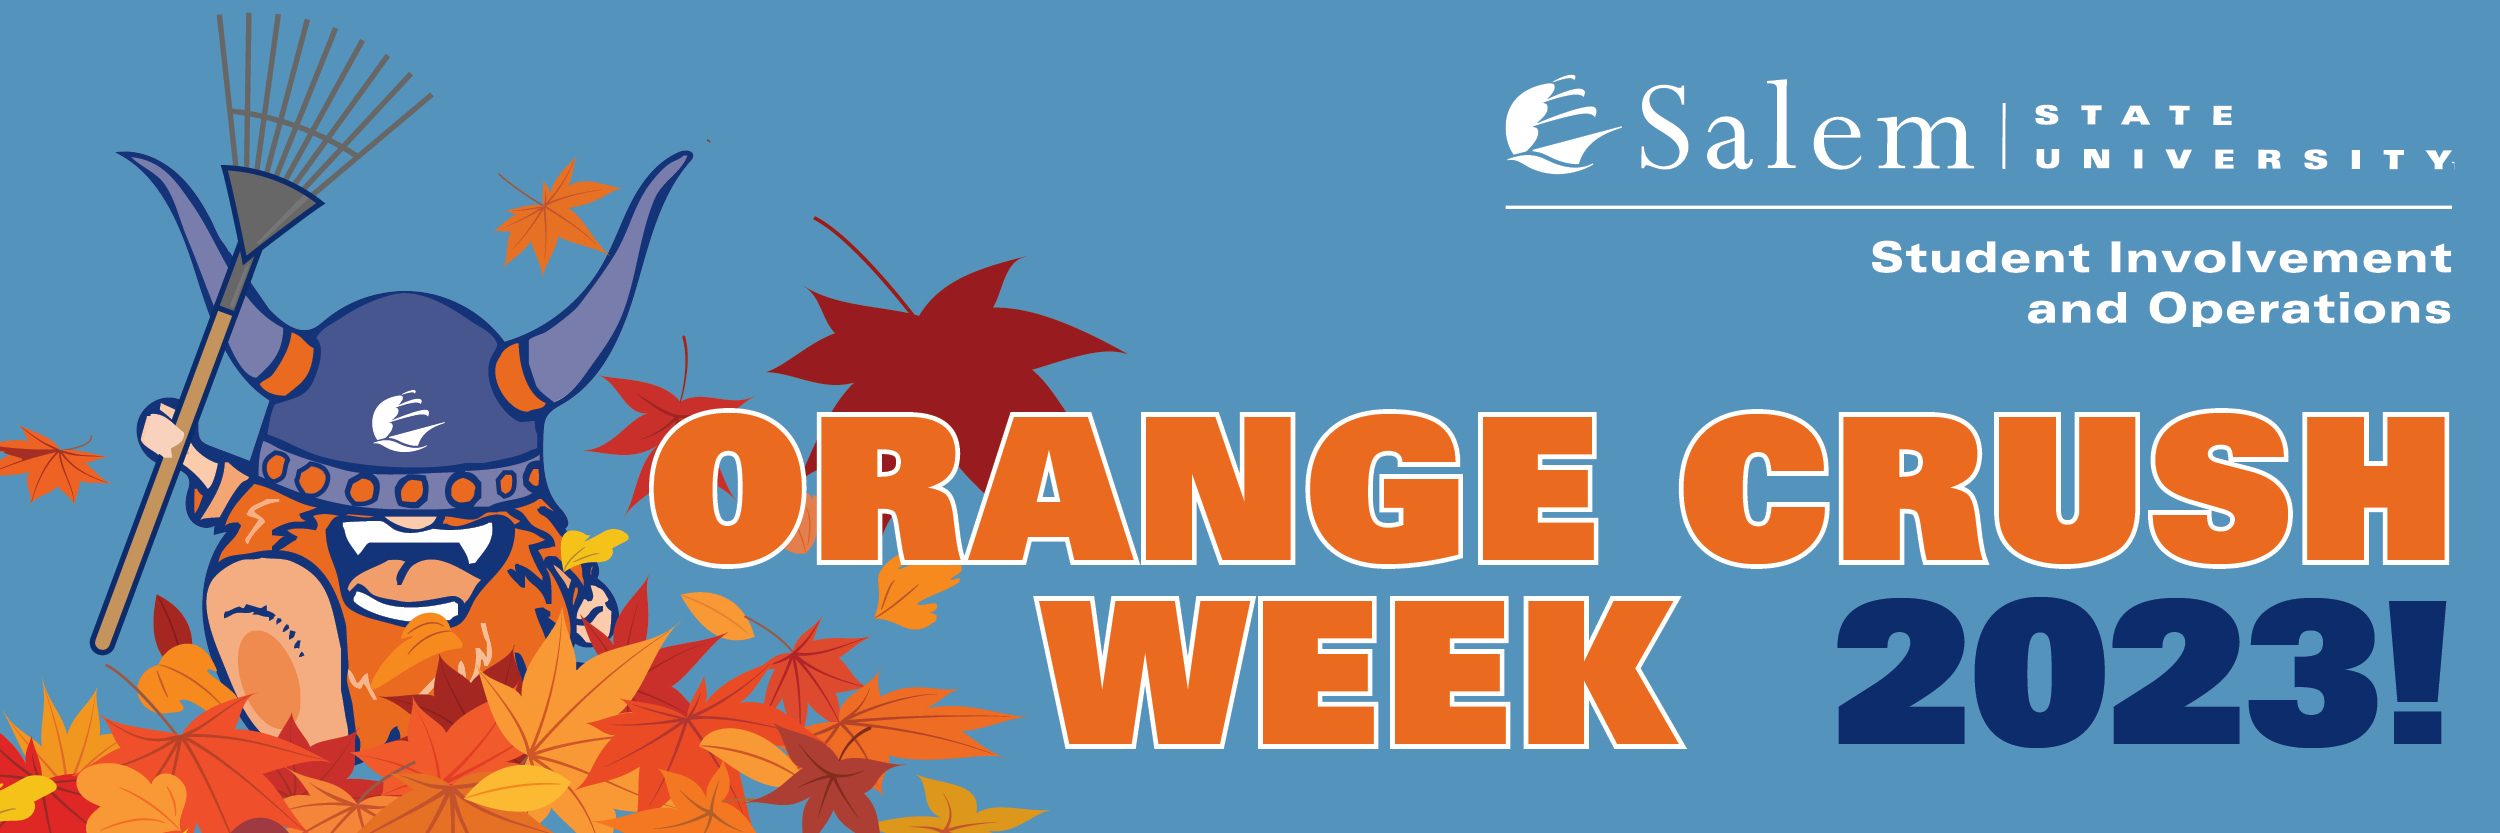 Orange Crush week banner - with image of Superfan